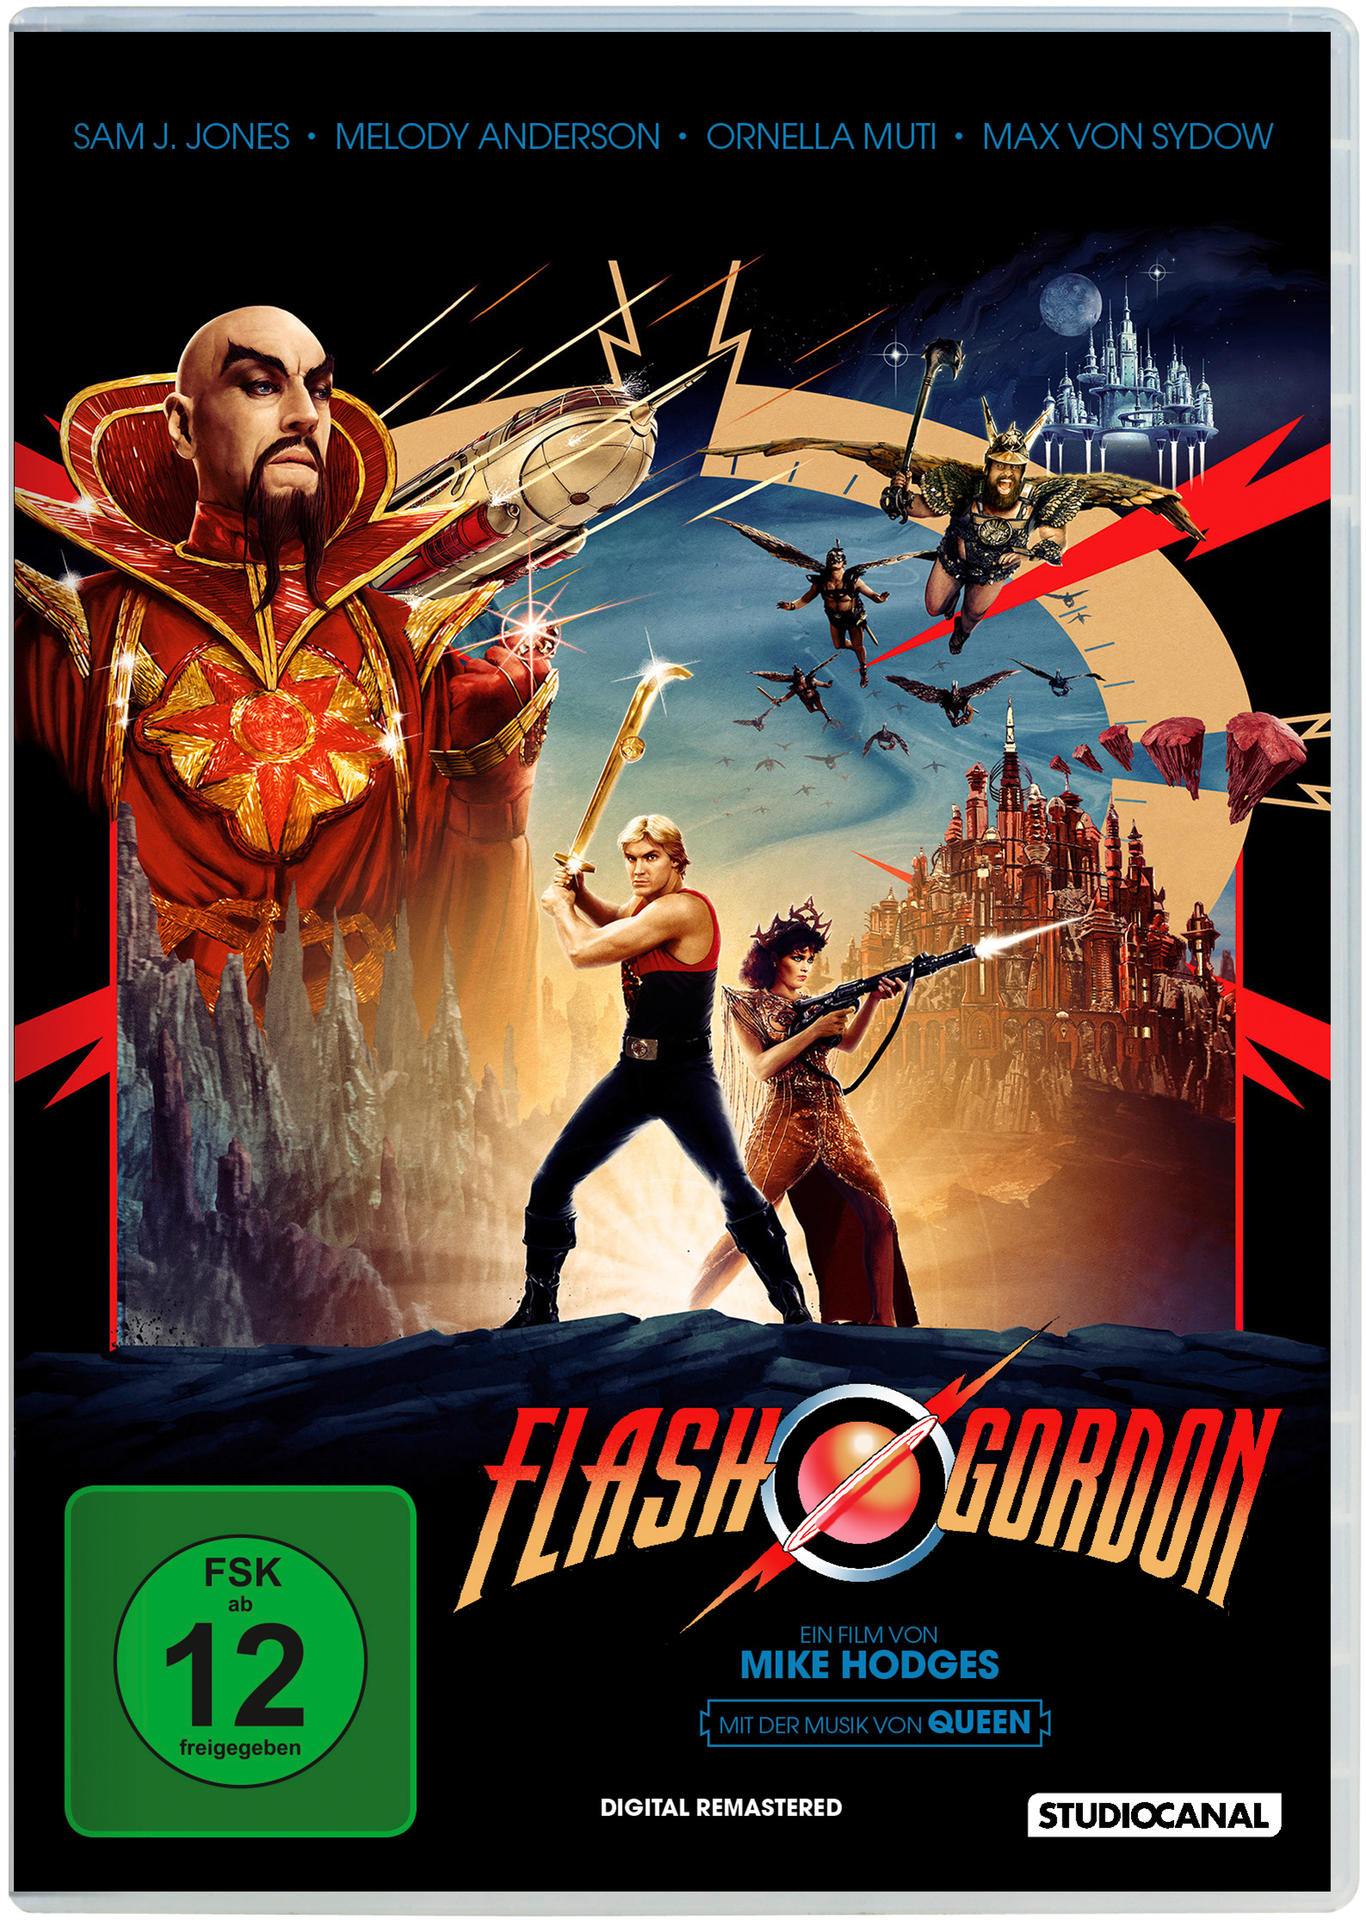 Gordon Flash DVD